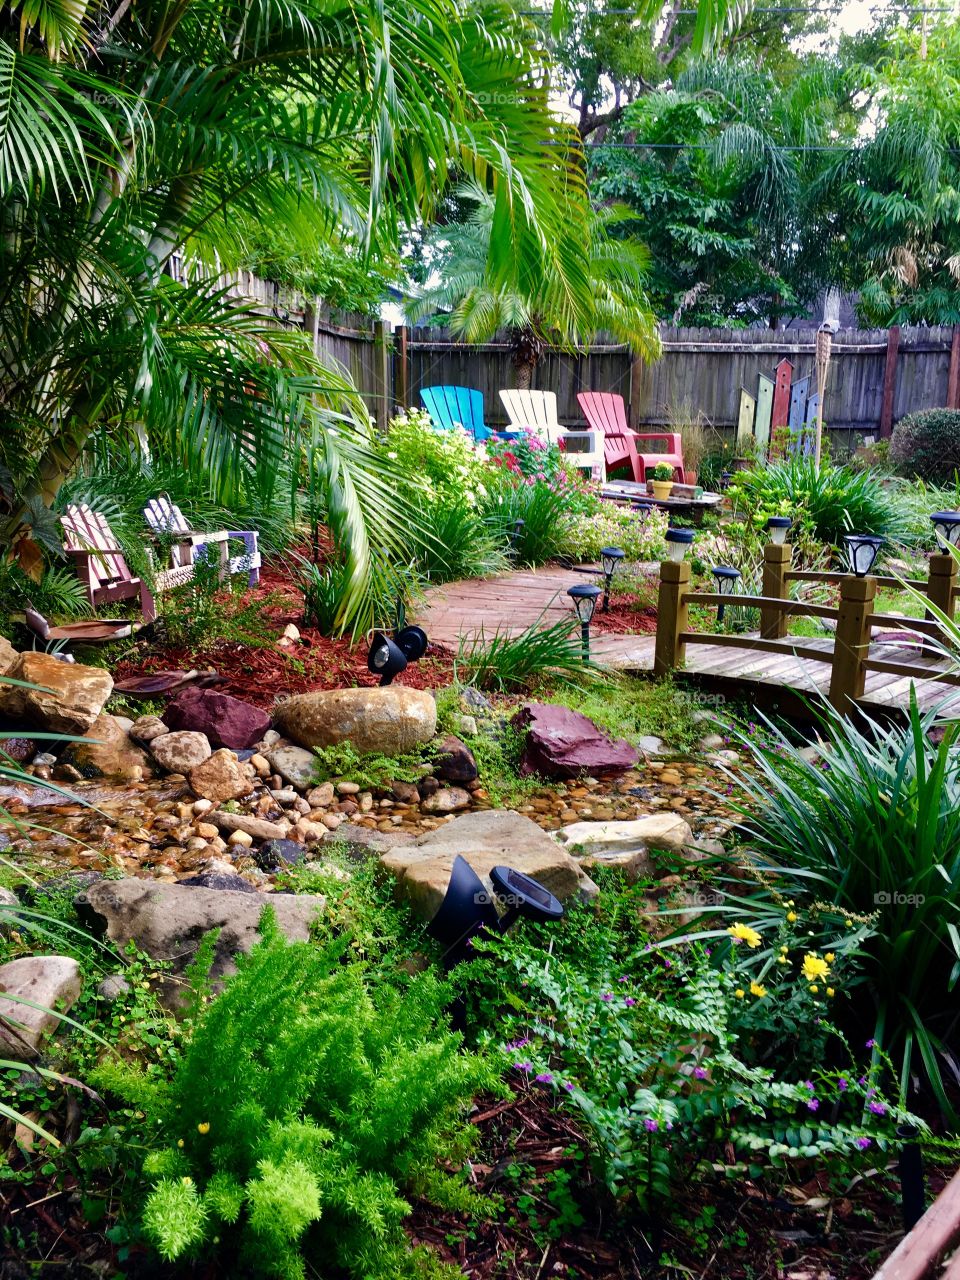 My backyard retreat. Where I come to feel enormous peace and the beauty of God's creativity. 